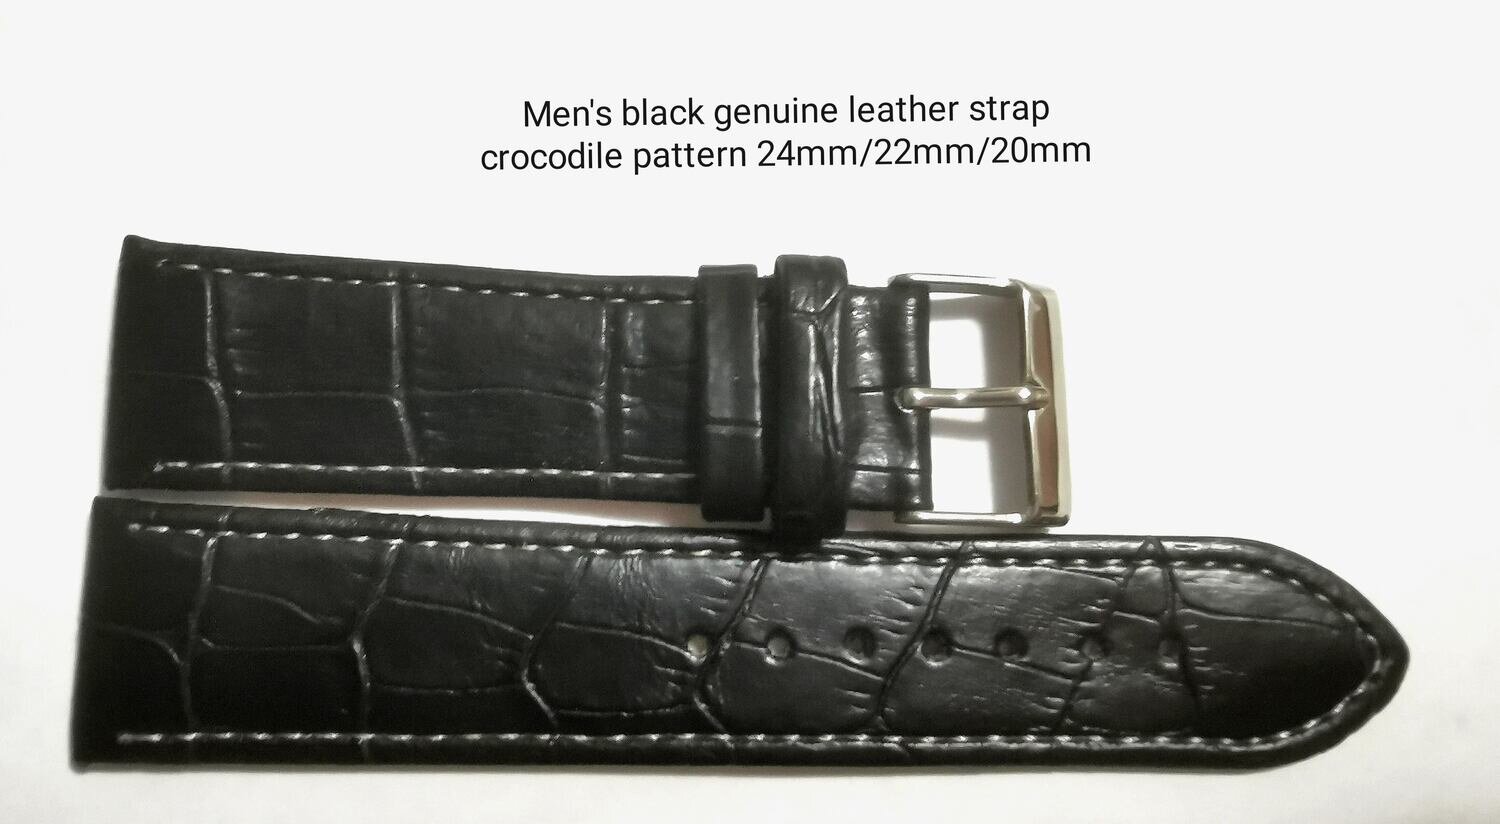 Men's black genuine leather crocodile pattern strap 20mm/22mm/24mm